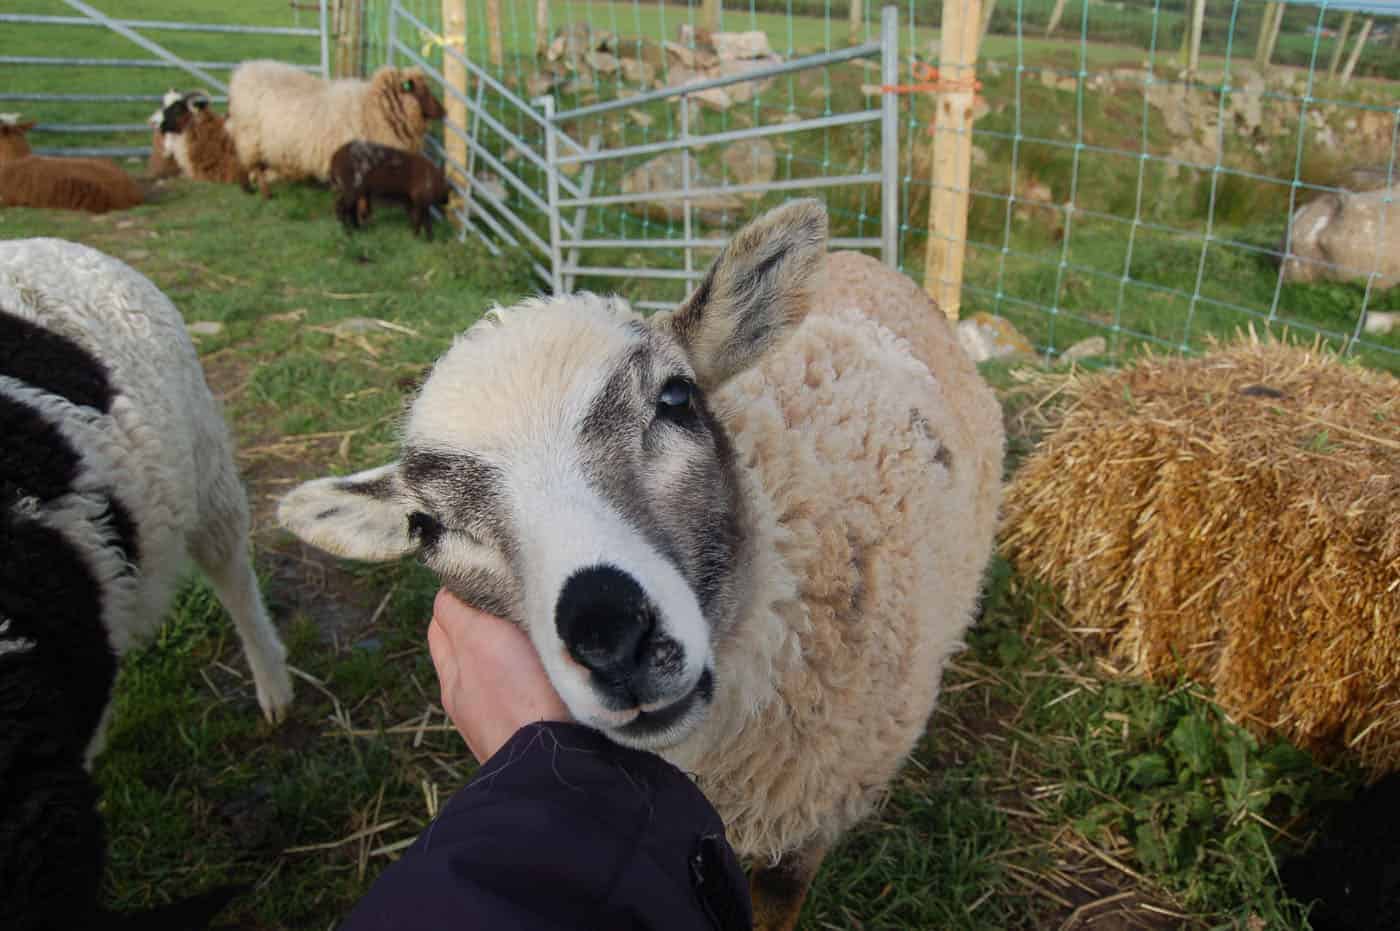 patchwork sheep sweet pet smudge cute lamb golden soay cross shetland jacob sheep